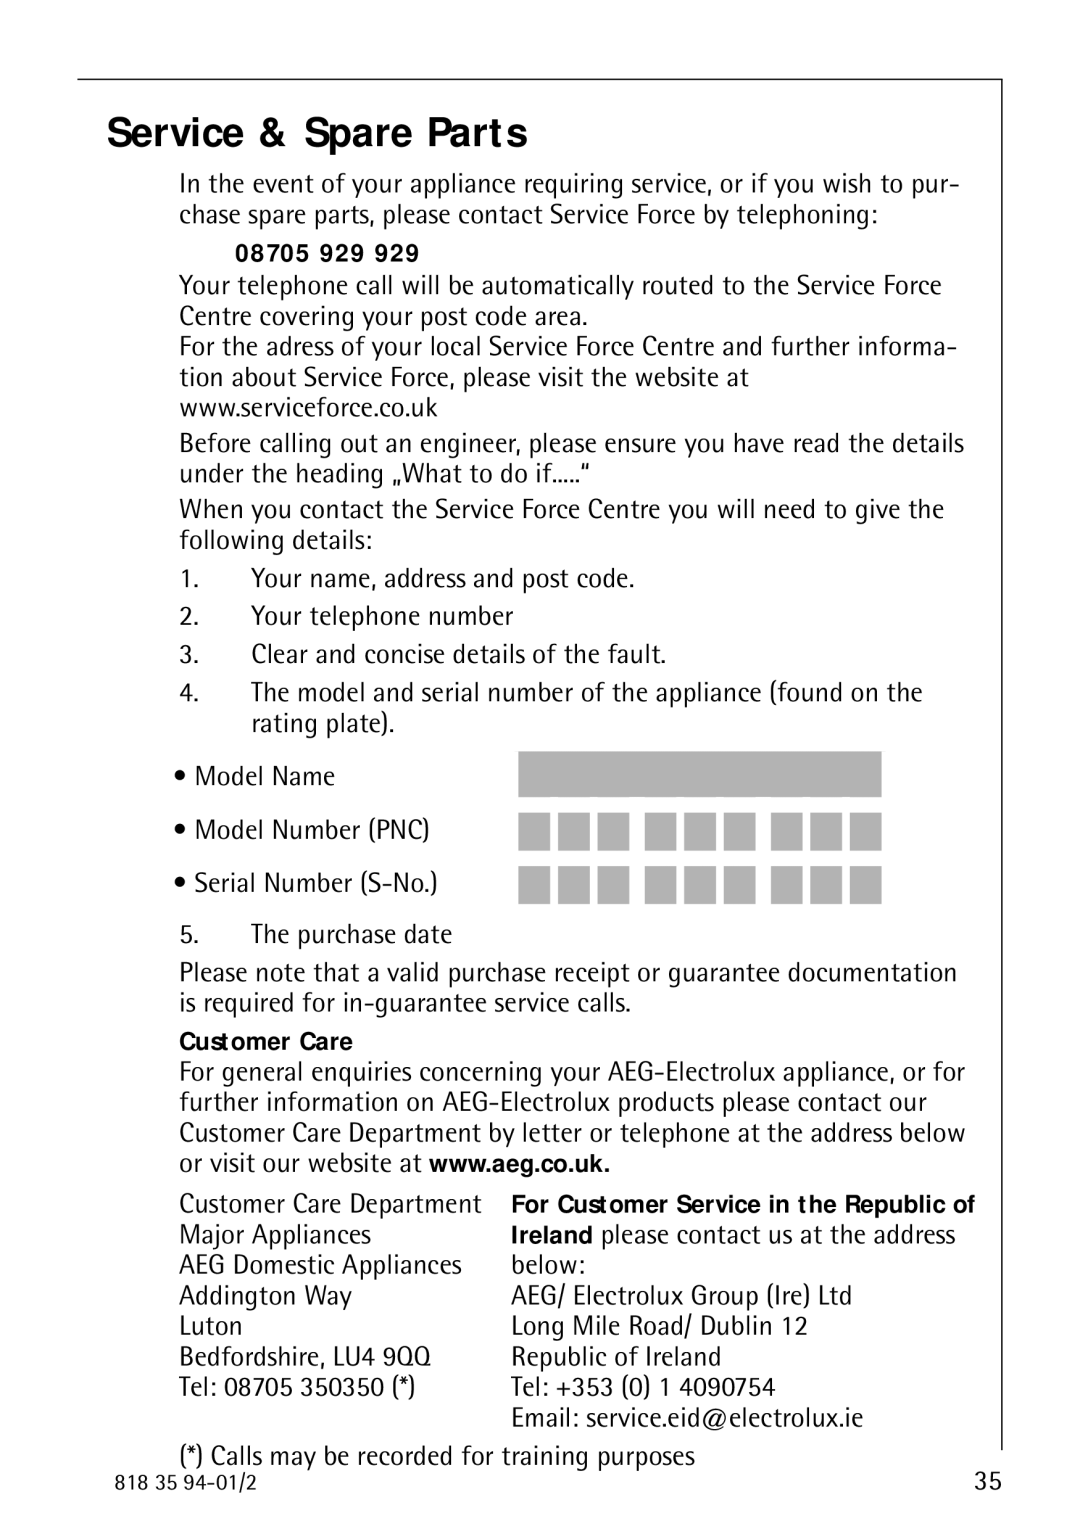 Electrolux 818 35 94-01/2 manual Service & Spare Parts, 08705 929, Customer Care, Major Appliances 